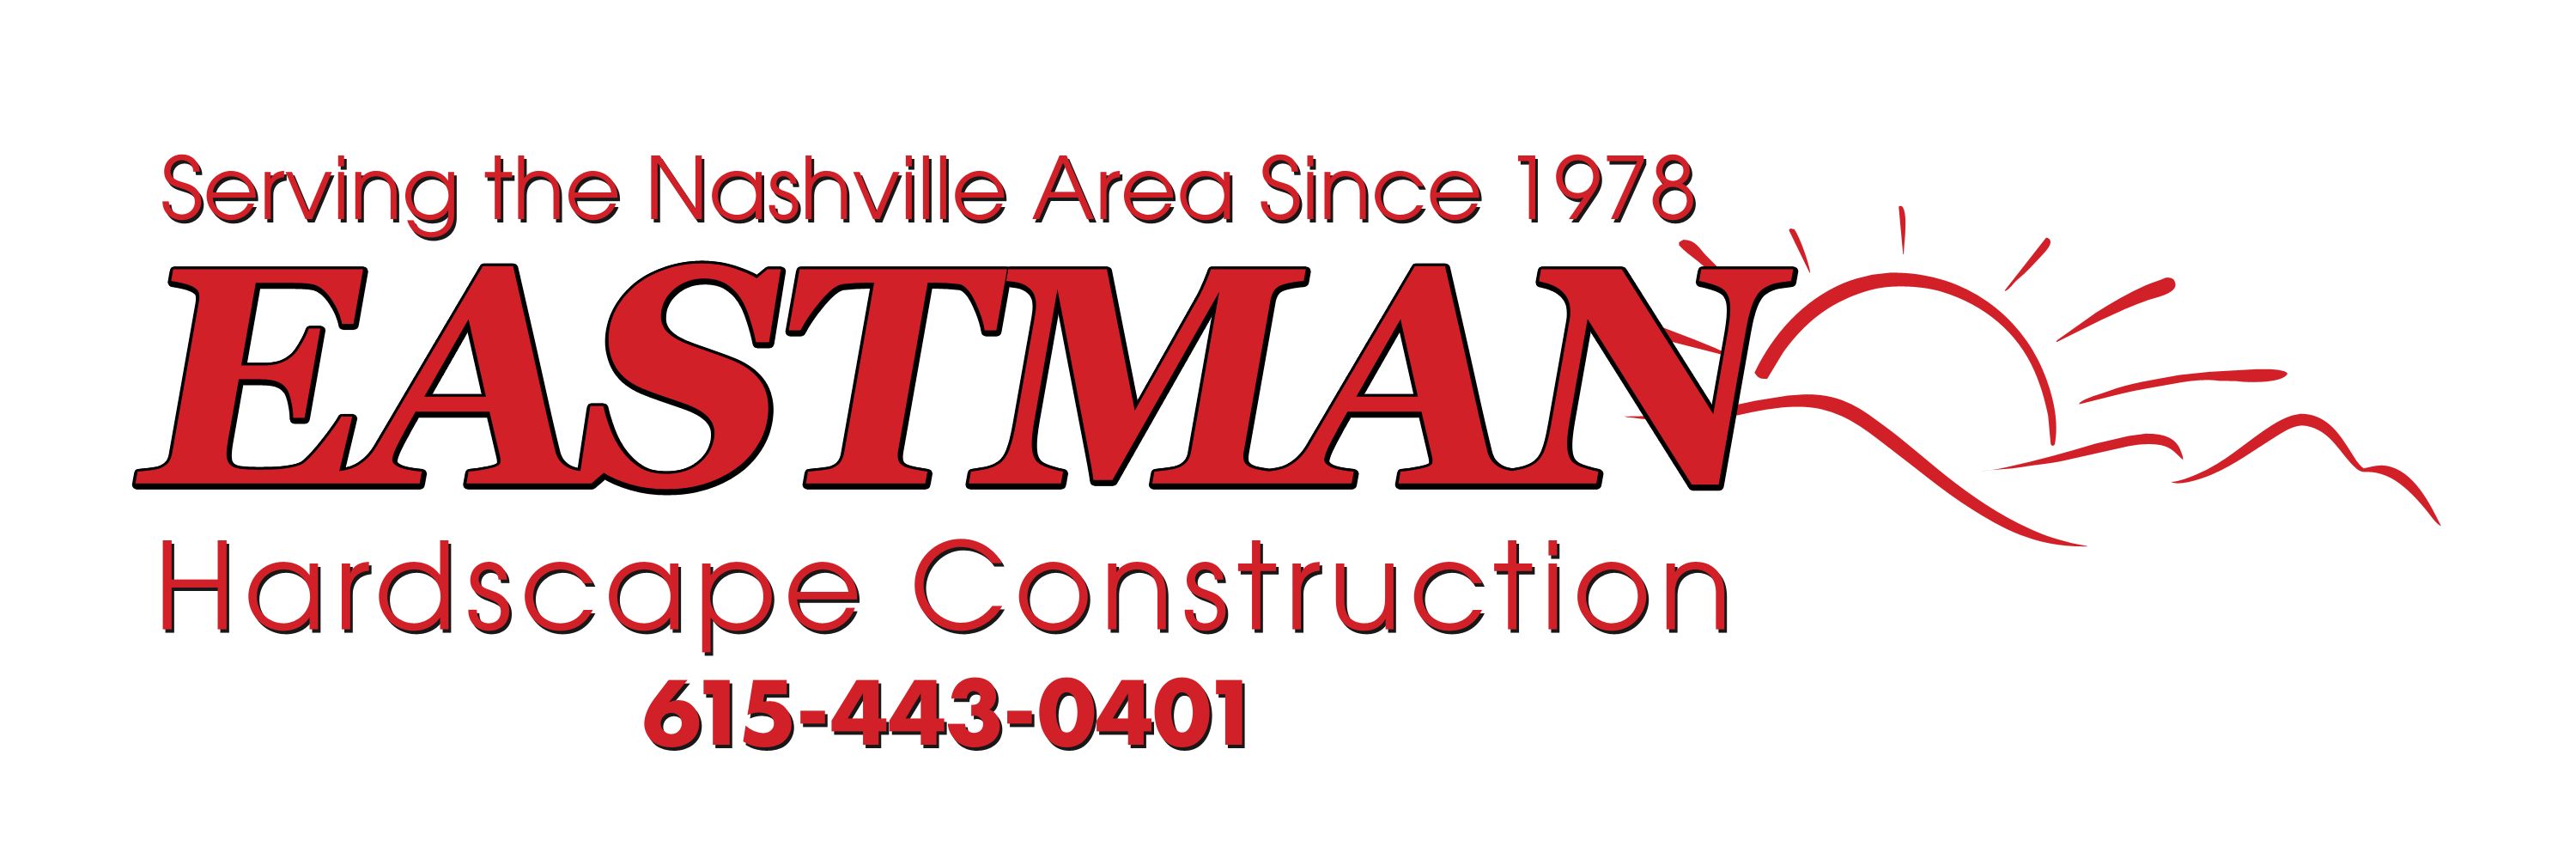 Eastman Hardscape Construction logo